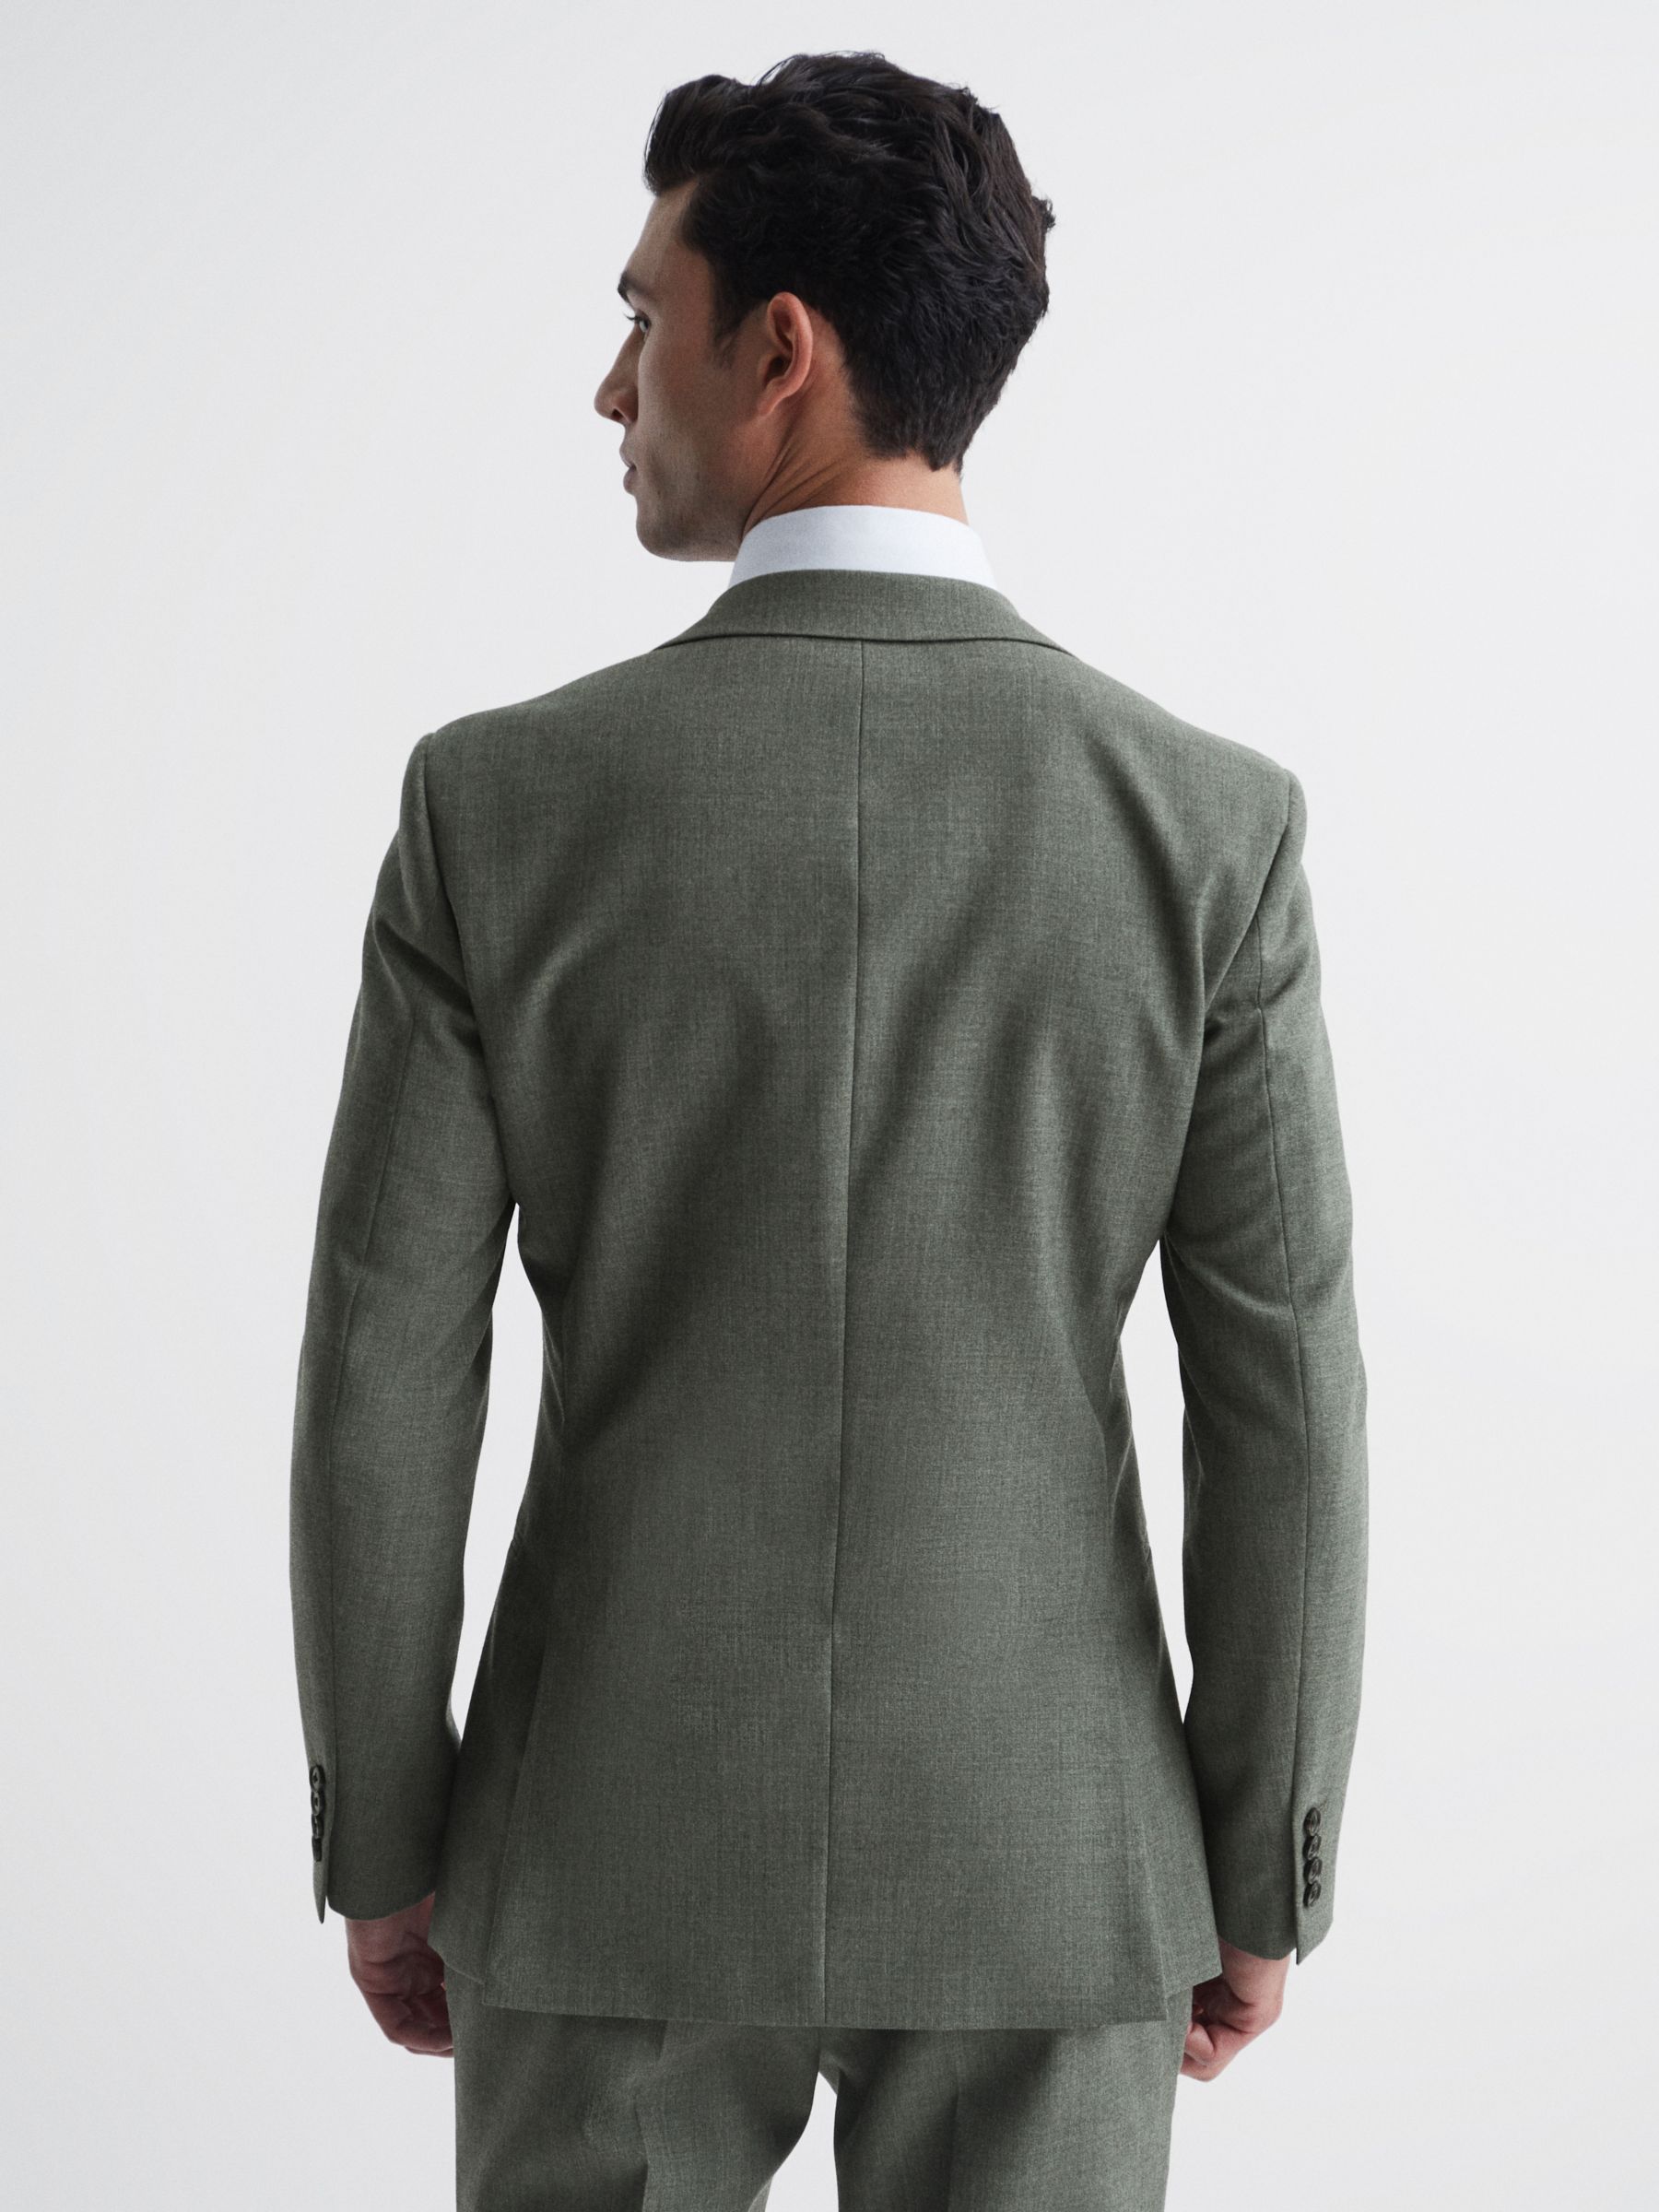 Buy Reiss Firm Tailored Wool Blazer, Green Online at johnlewis.com